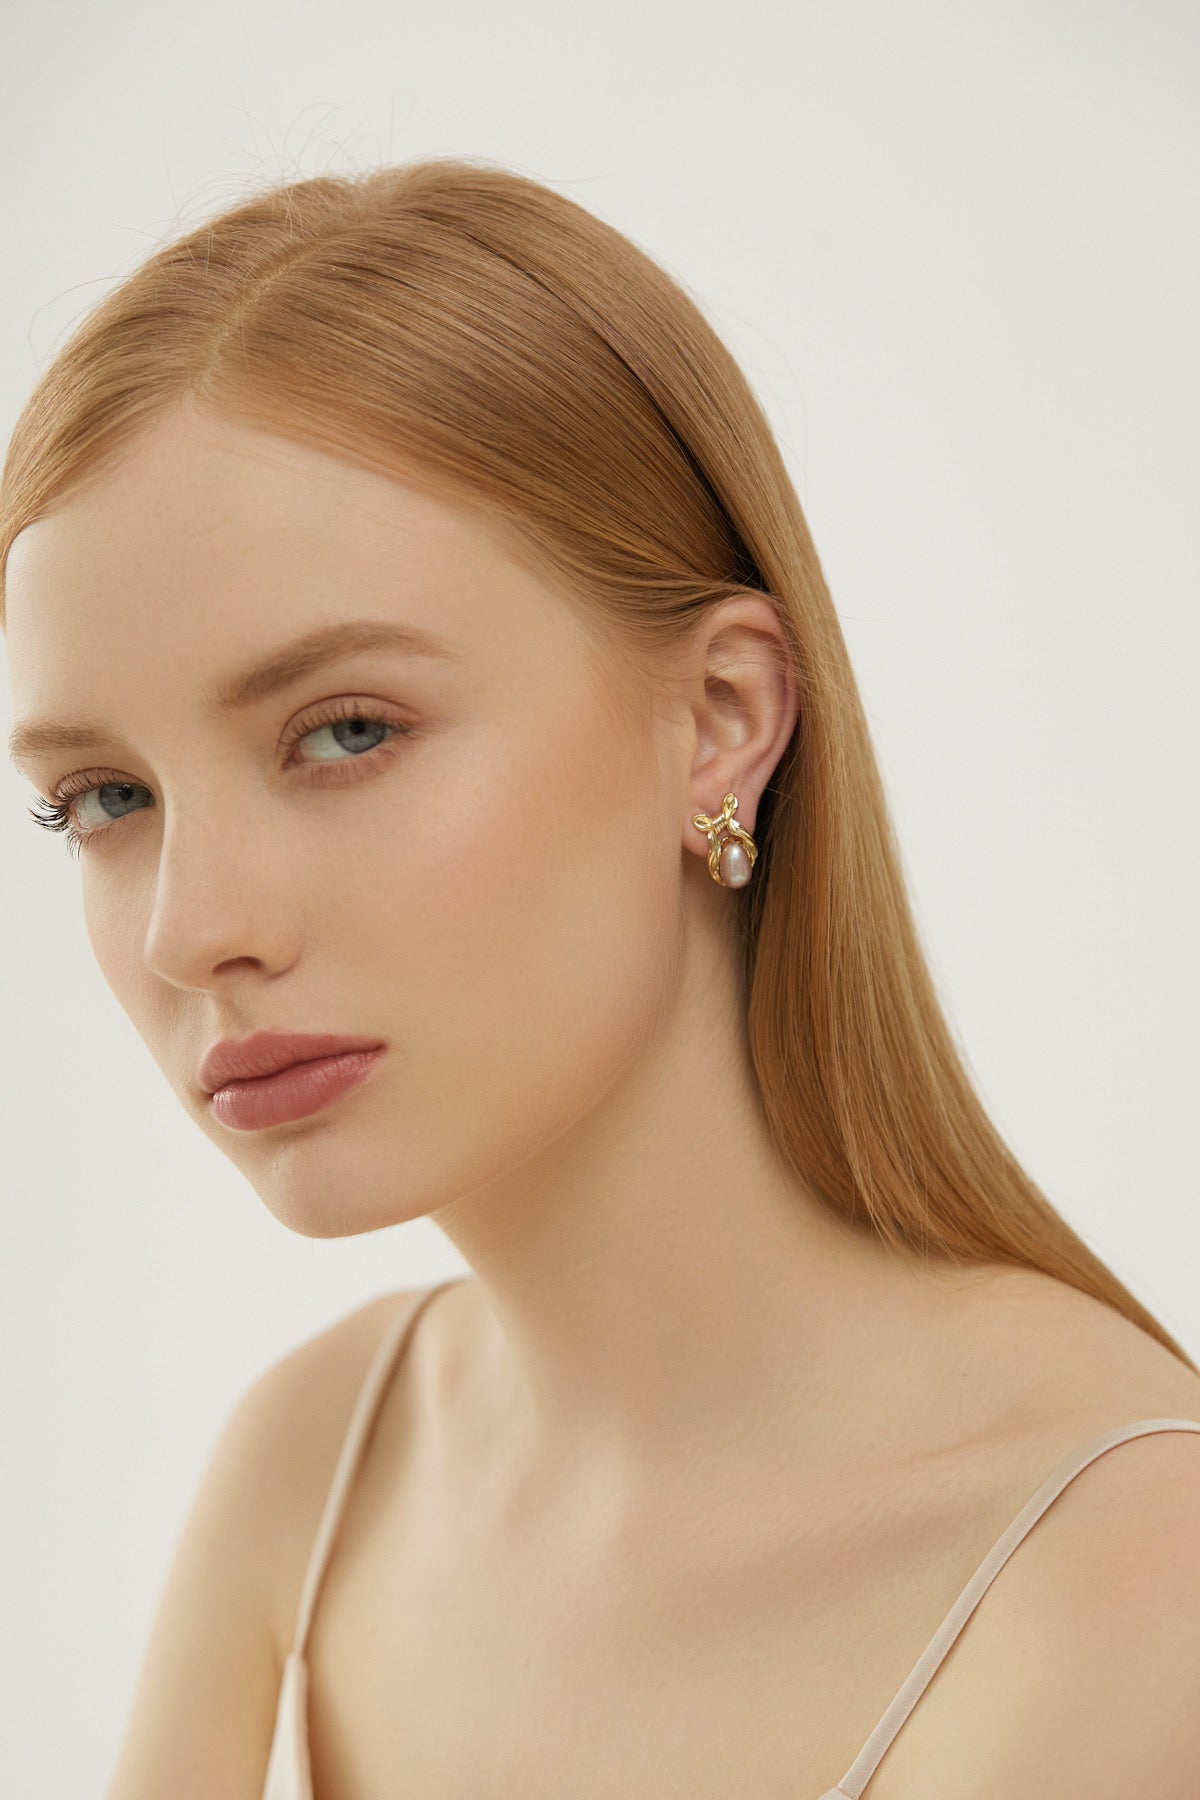 KOMi Natural stone Acrylic Beads Pearl Earrings Elegant Geometric